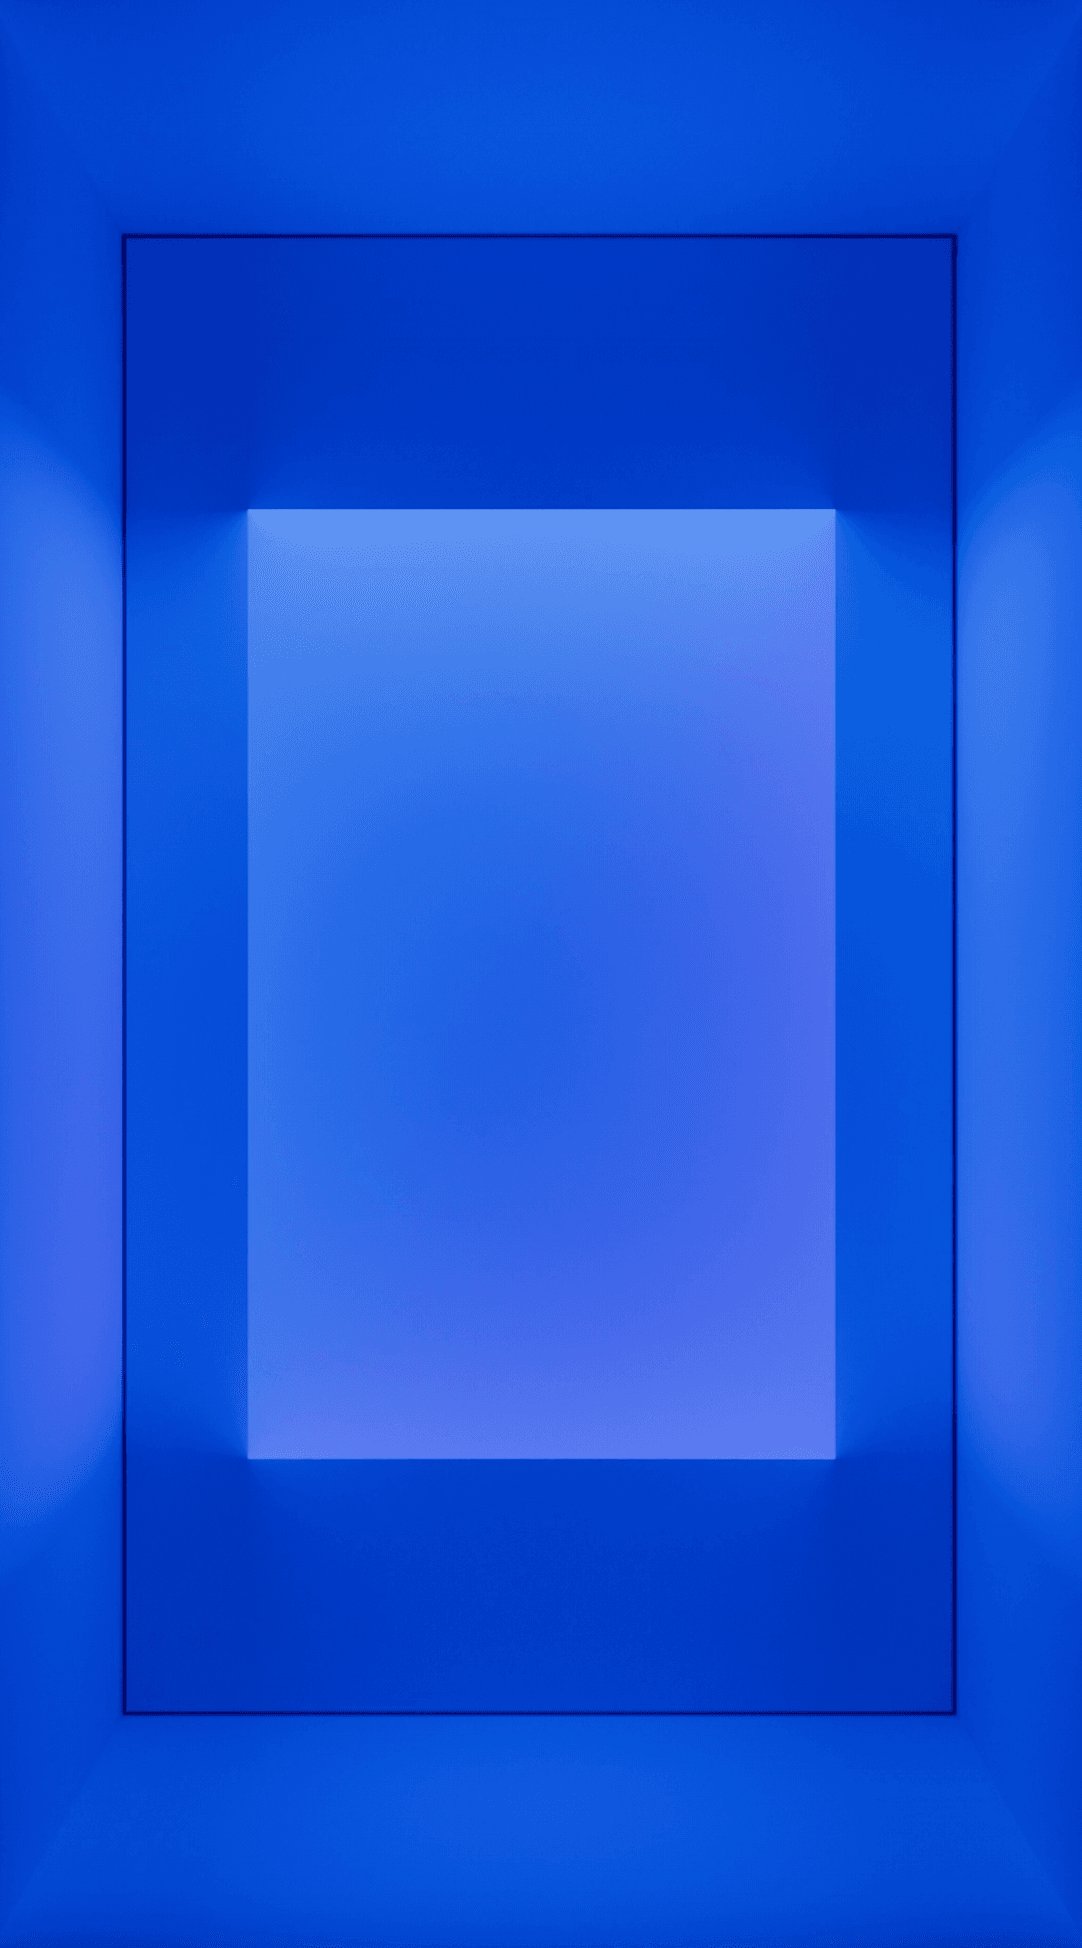 Into the blue by Maxim Zhestkov